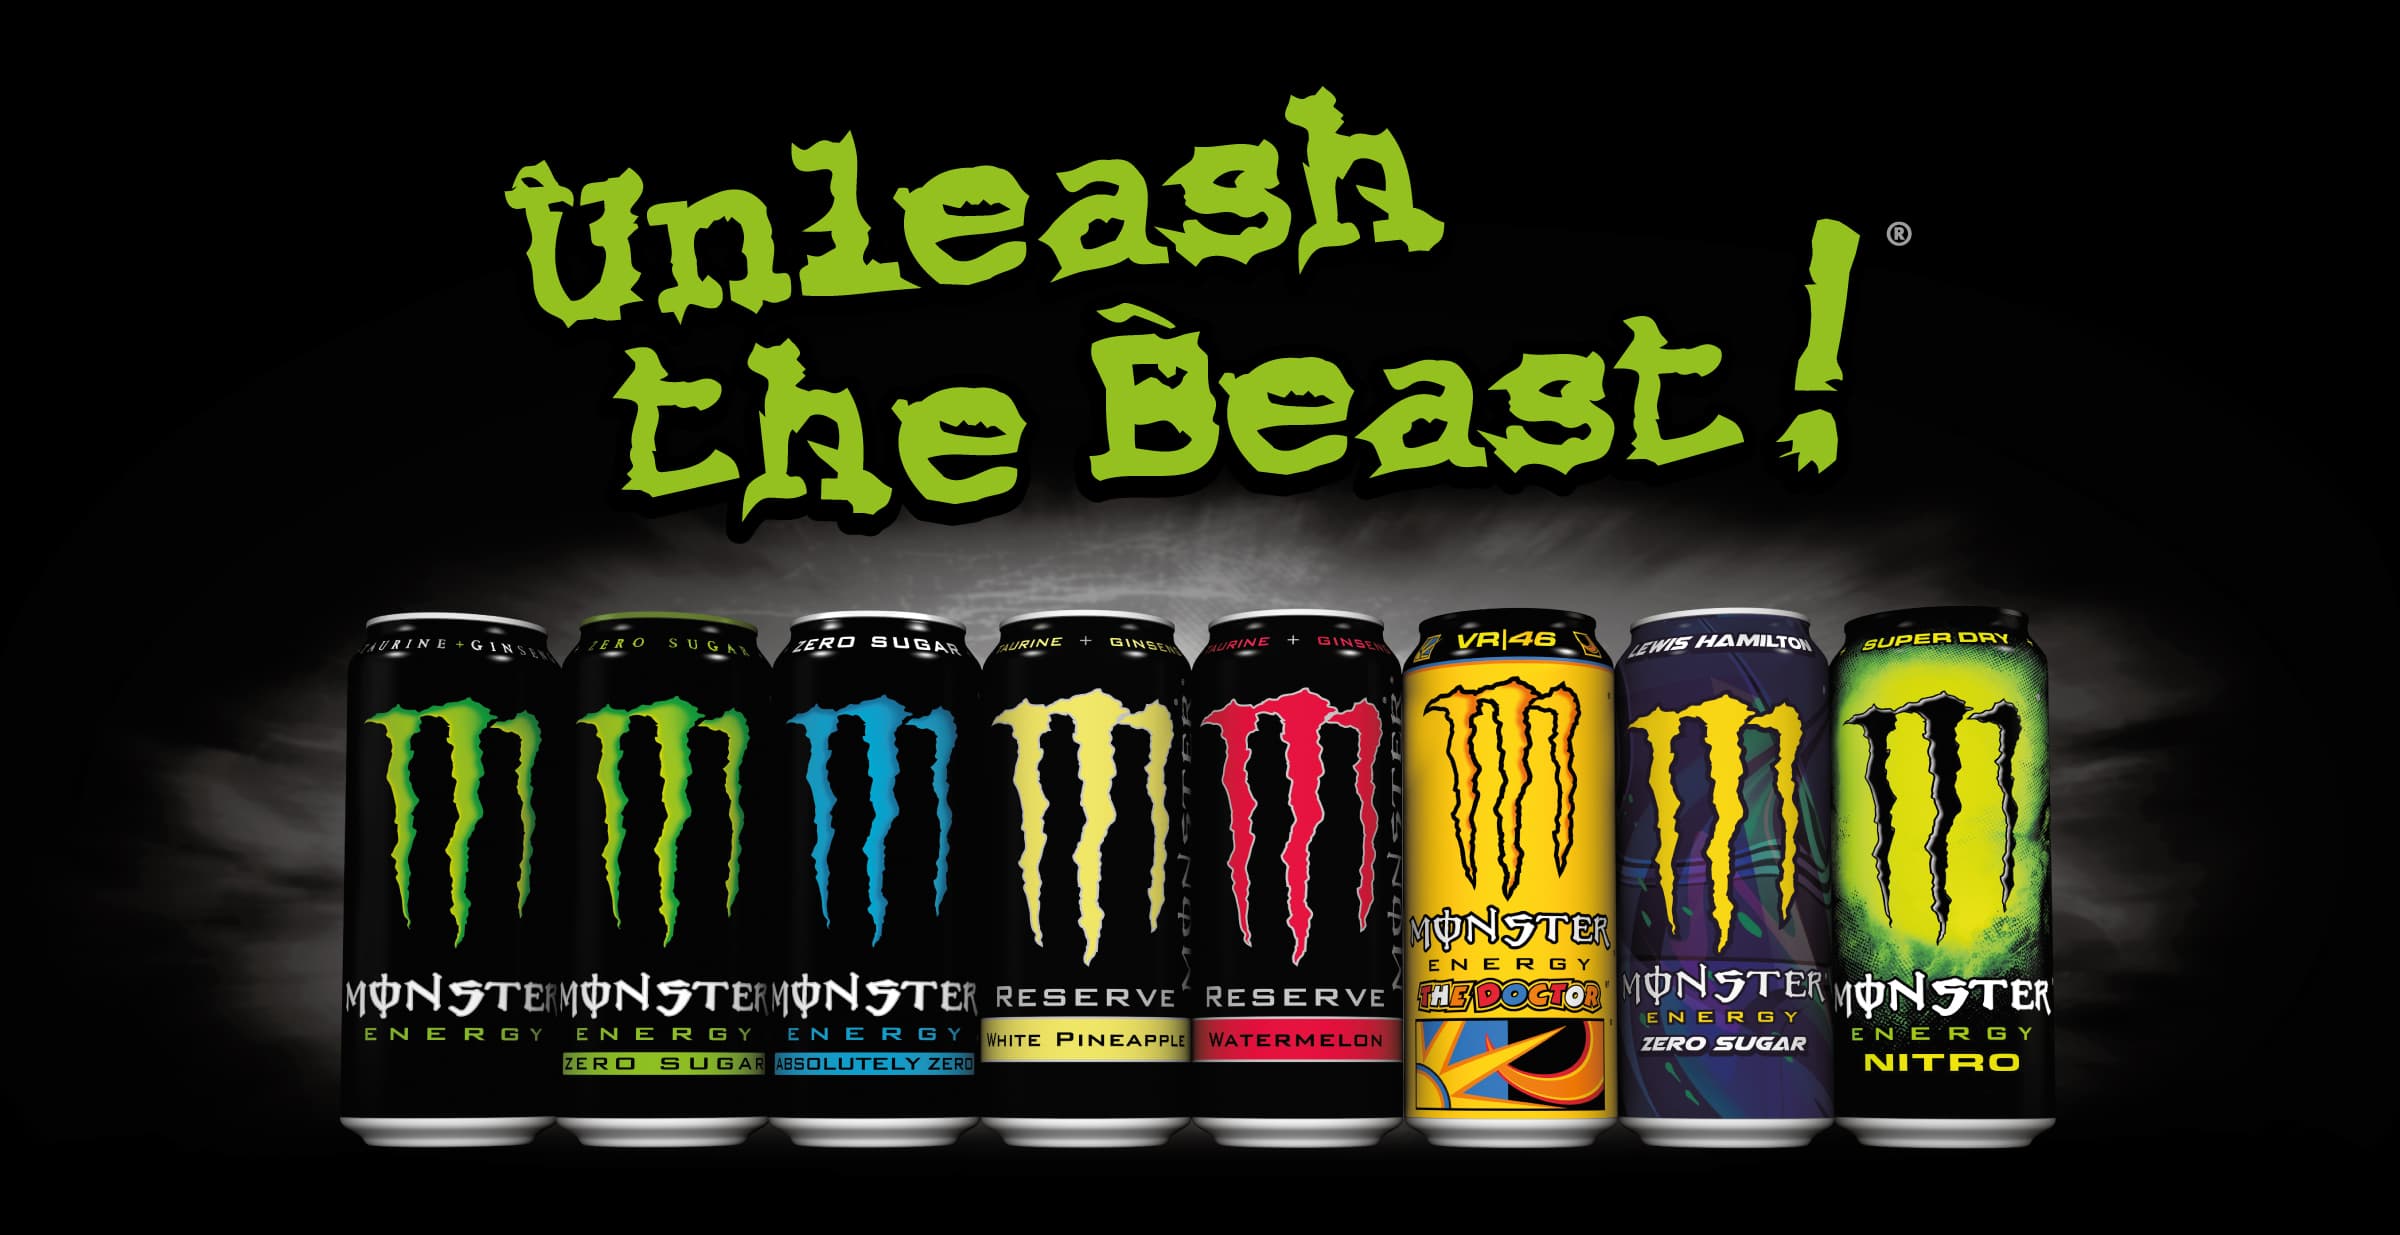 Unleash the beast!